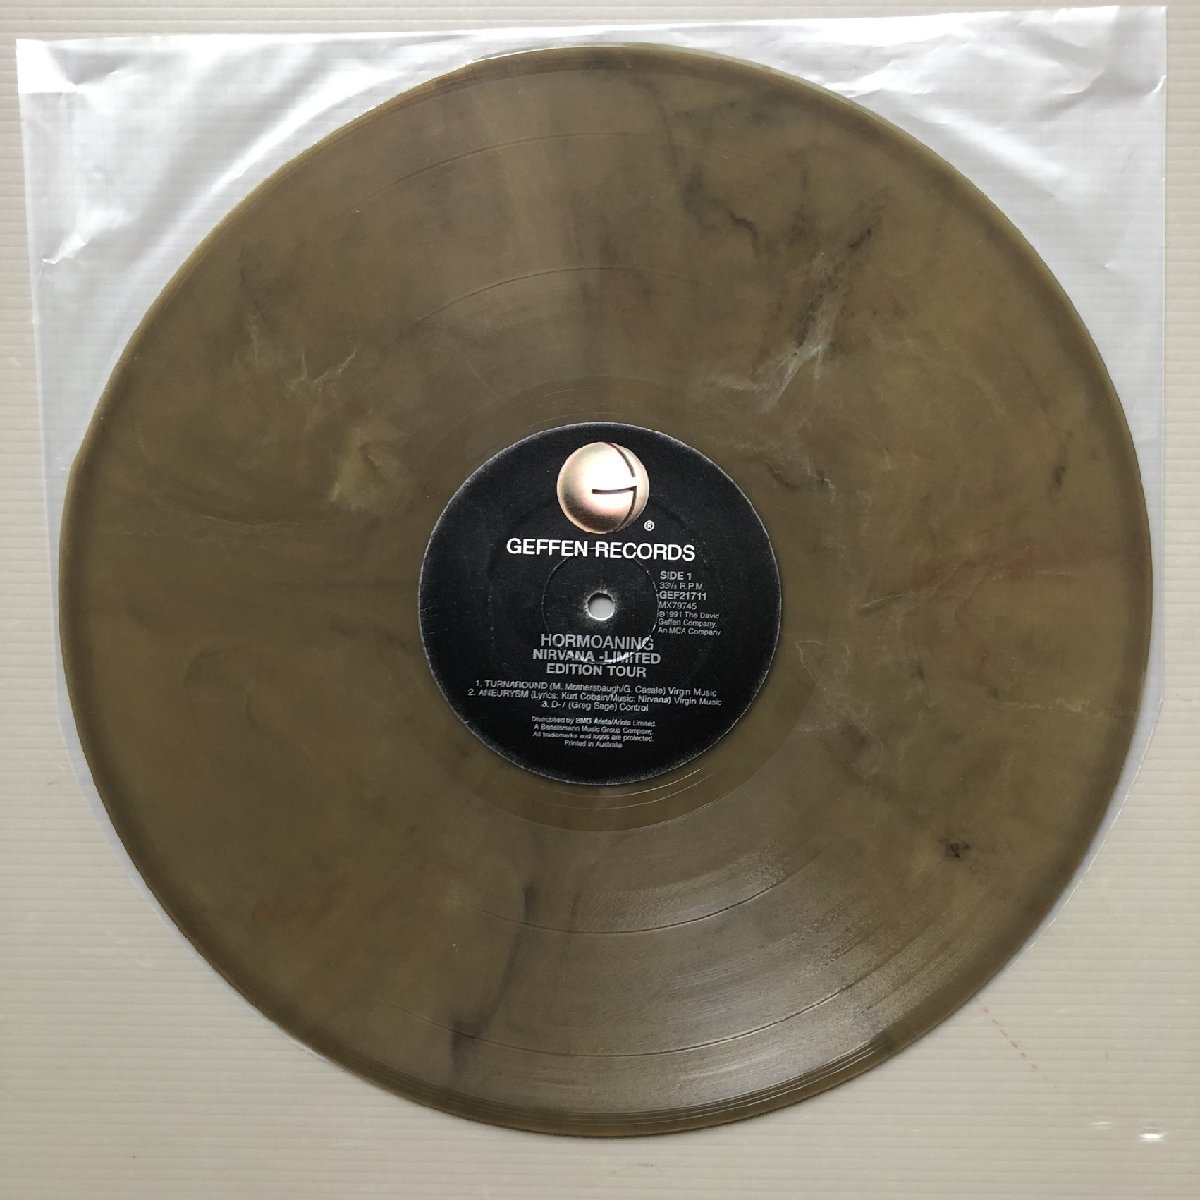  good record 1992 year ultra rare Australia record original Release record niruva-naNirvana LP color record Hormoaning (Exclusive Australian \'92 Tour EP)